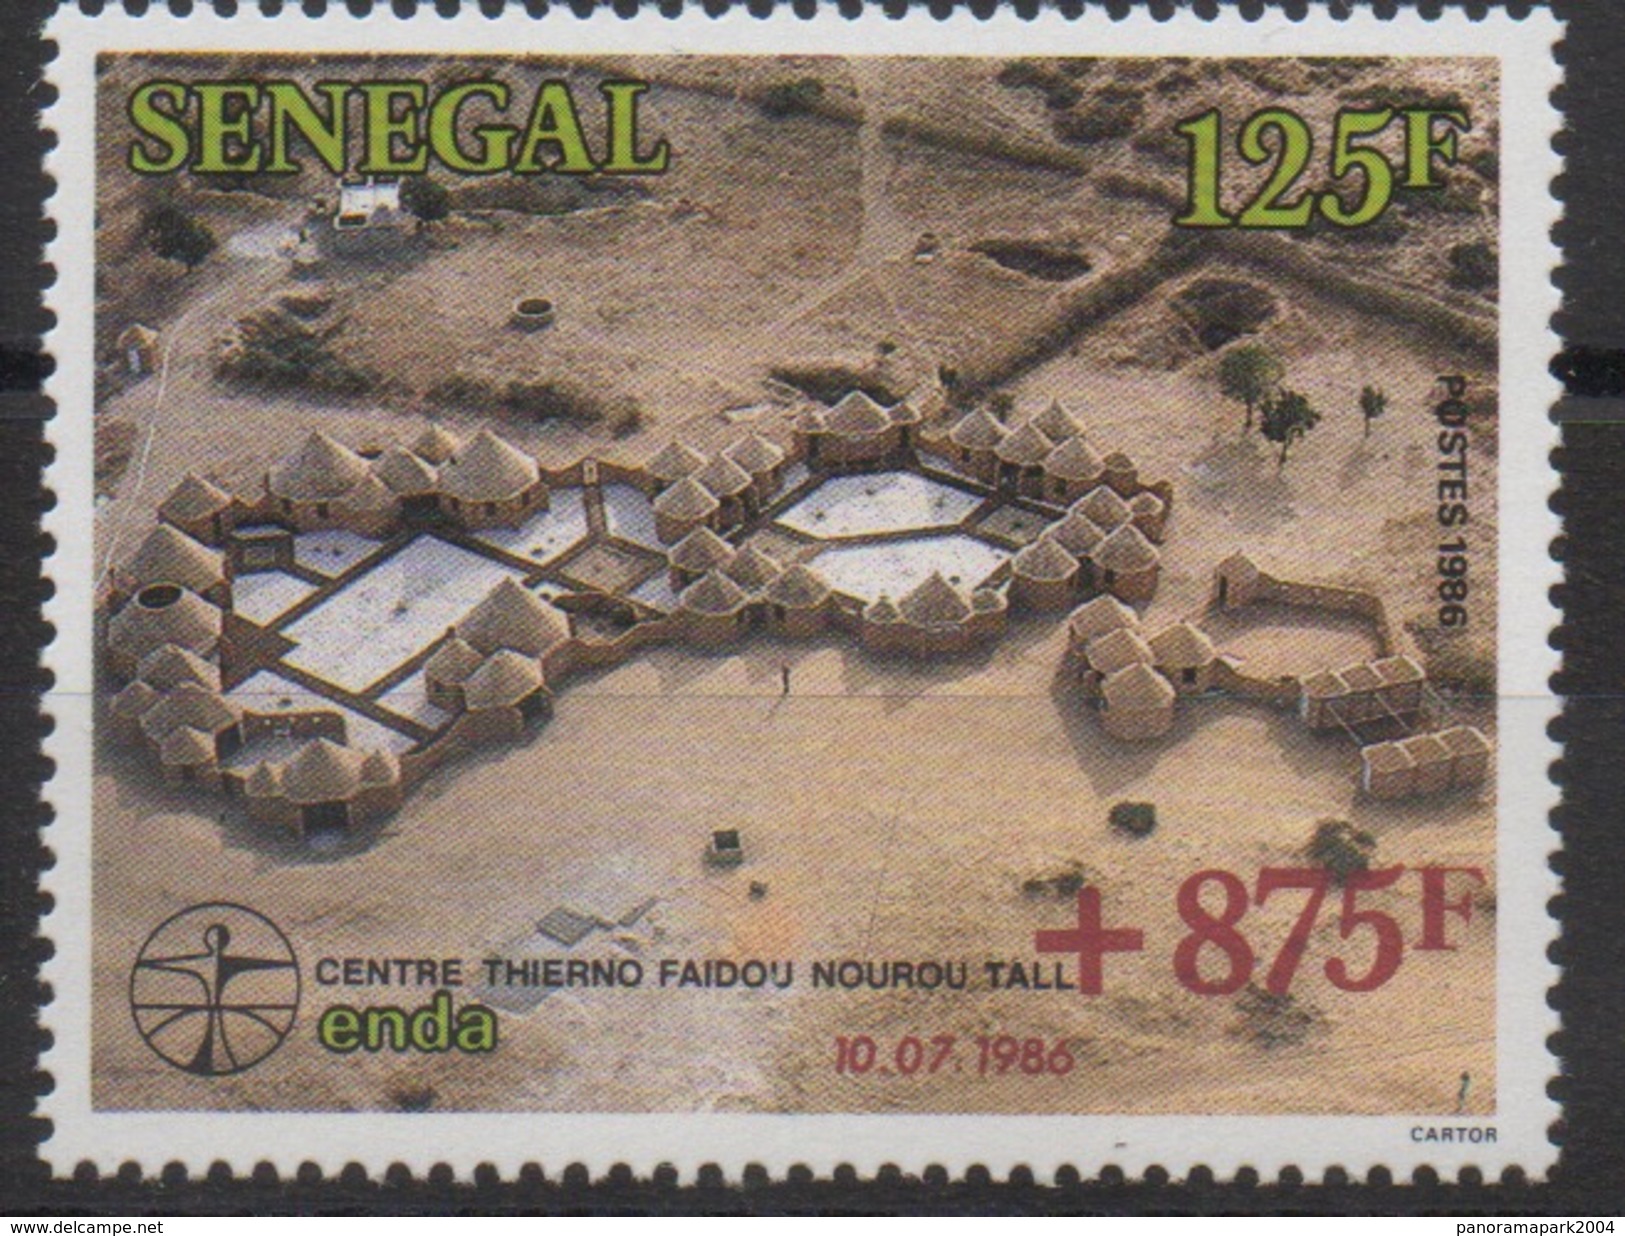 Sénégal 1988 Mi. 987I +875F 10.07.1986 ENDA FAIDOU SAIDOU VARIETY CENTRE THERMO MNH**  SCARCE ! - Sénégal (1960-...)